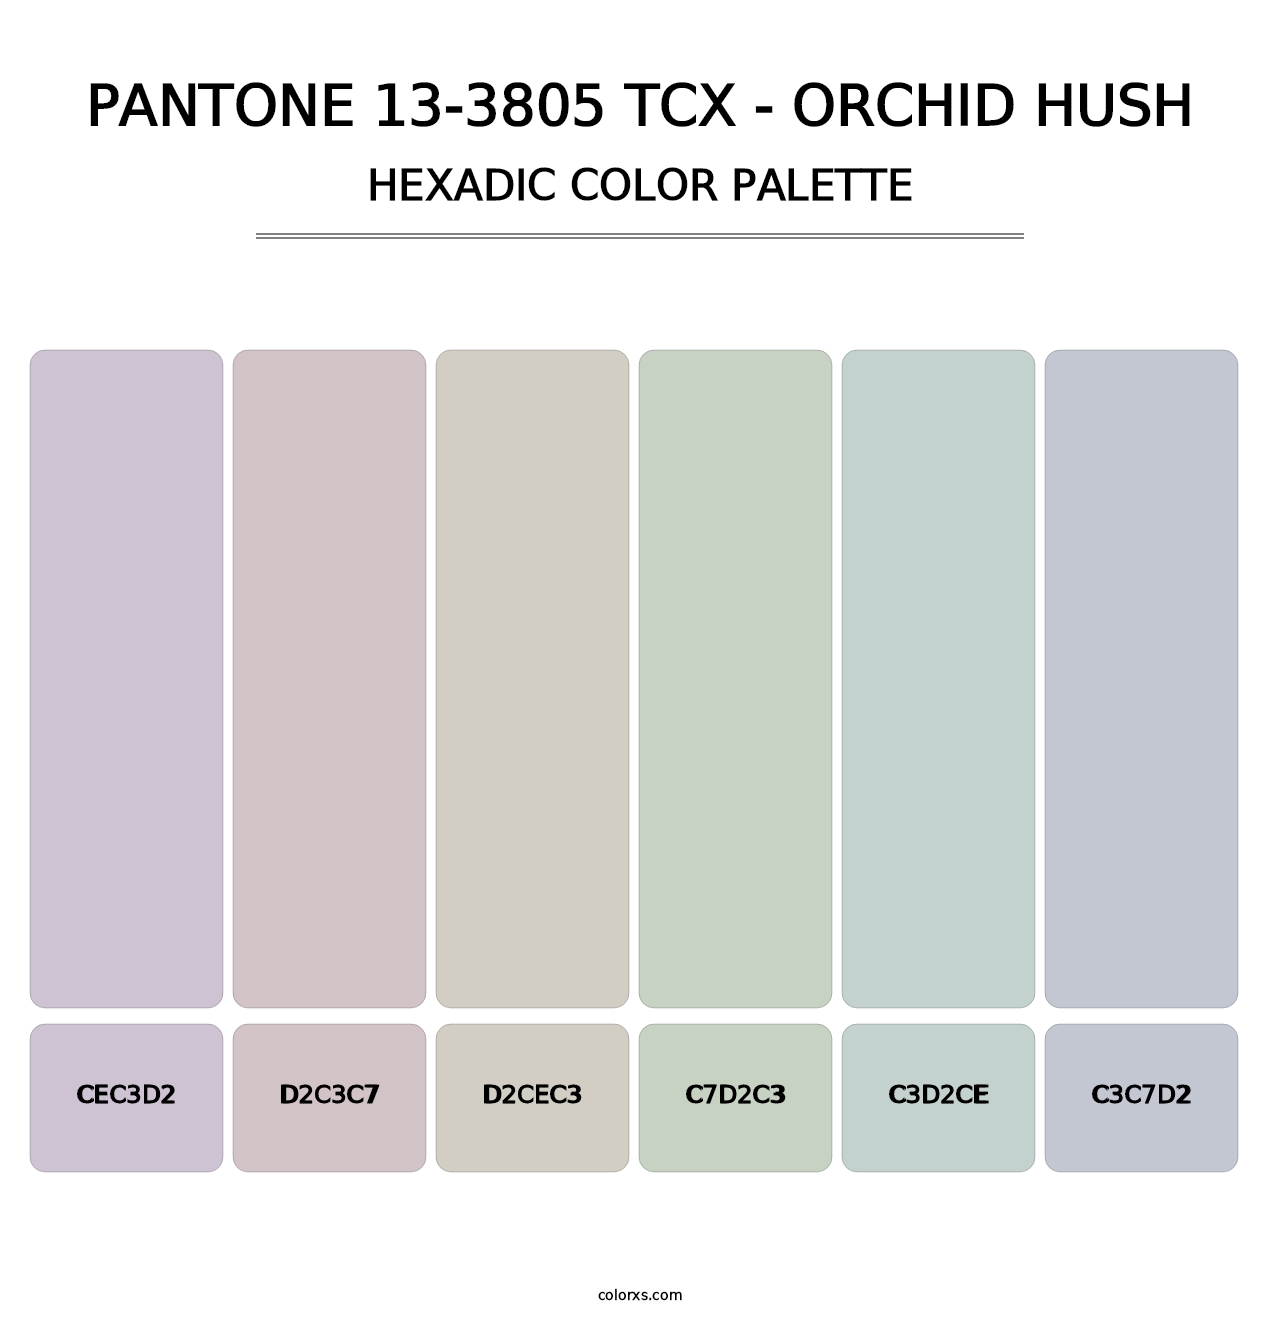 PANTONE 13-3805 TCX - Orchid Hush - Hexadic Color Palette